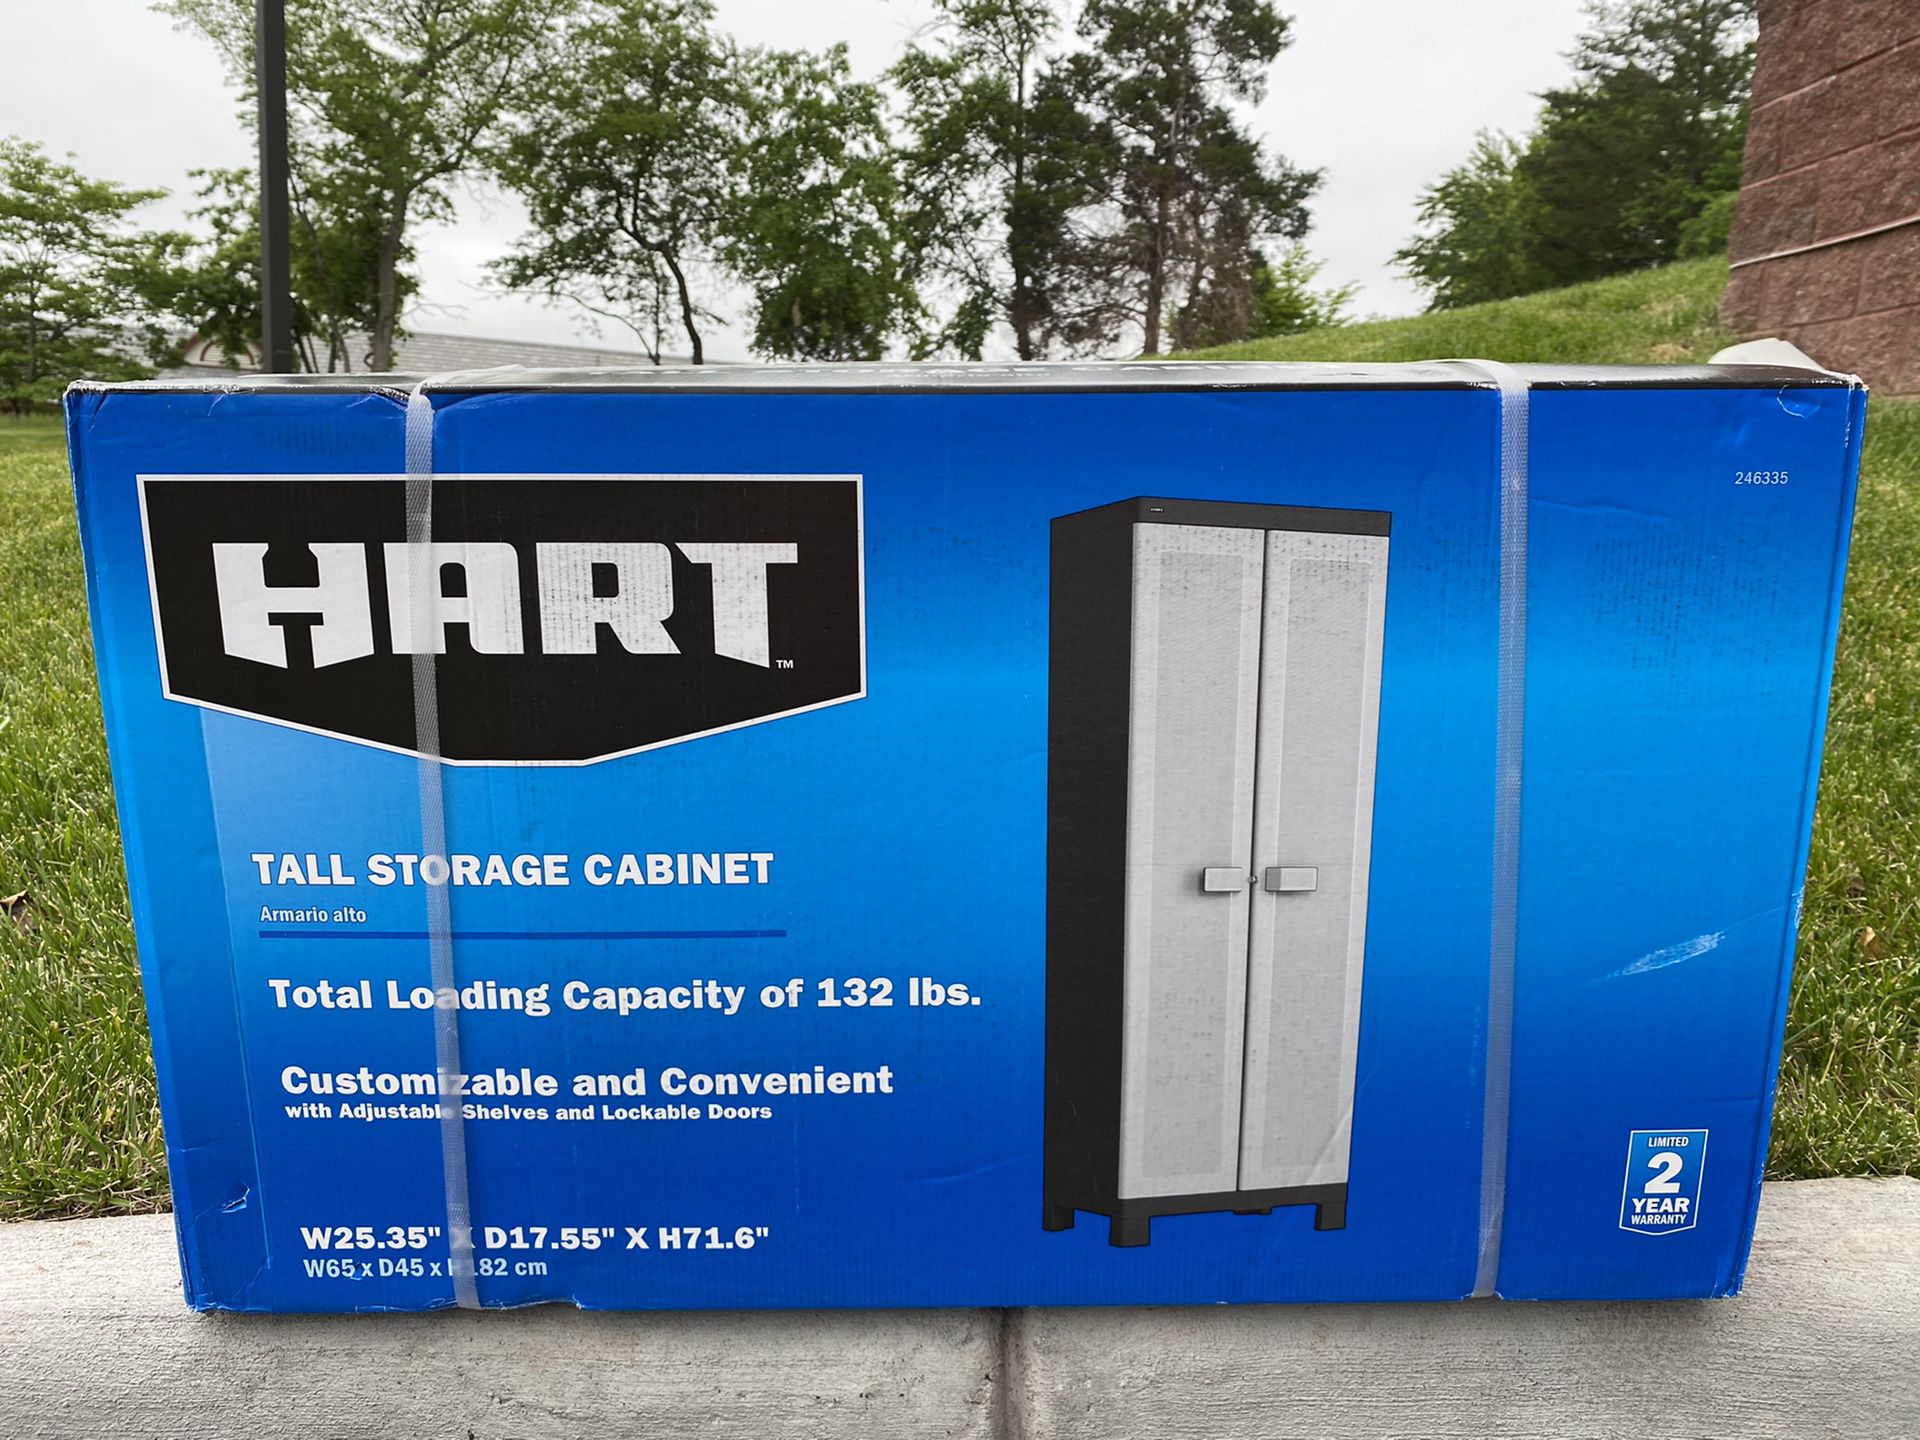 NEW - Tall Storage Cabinet